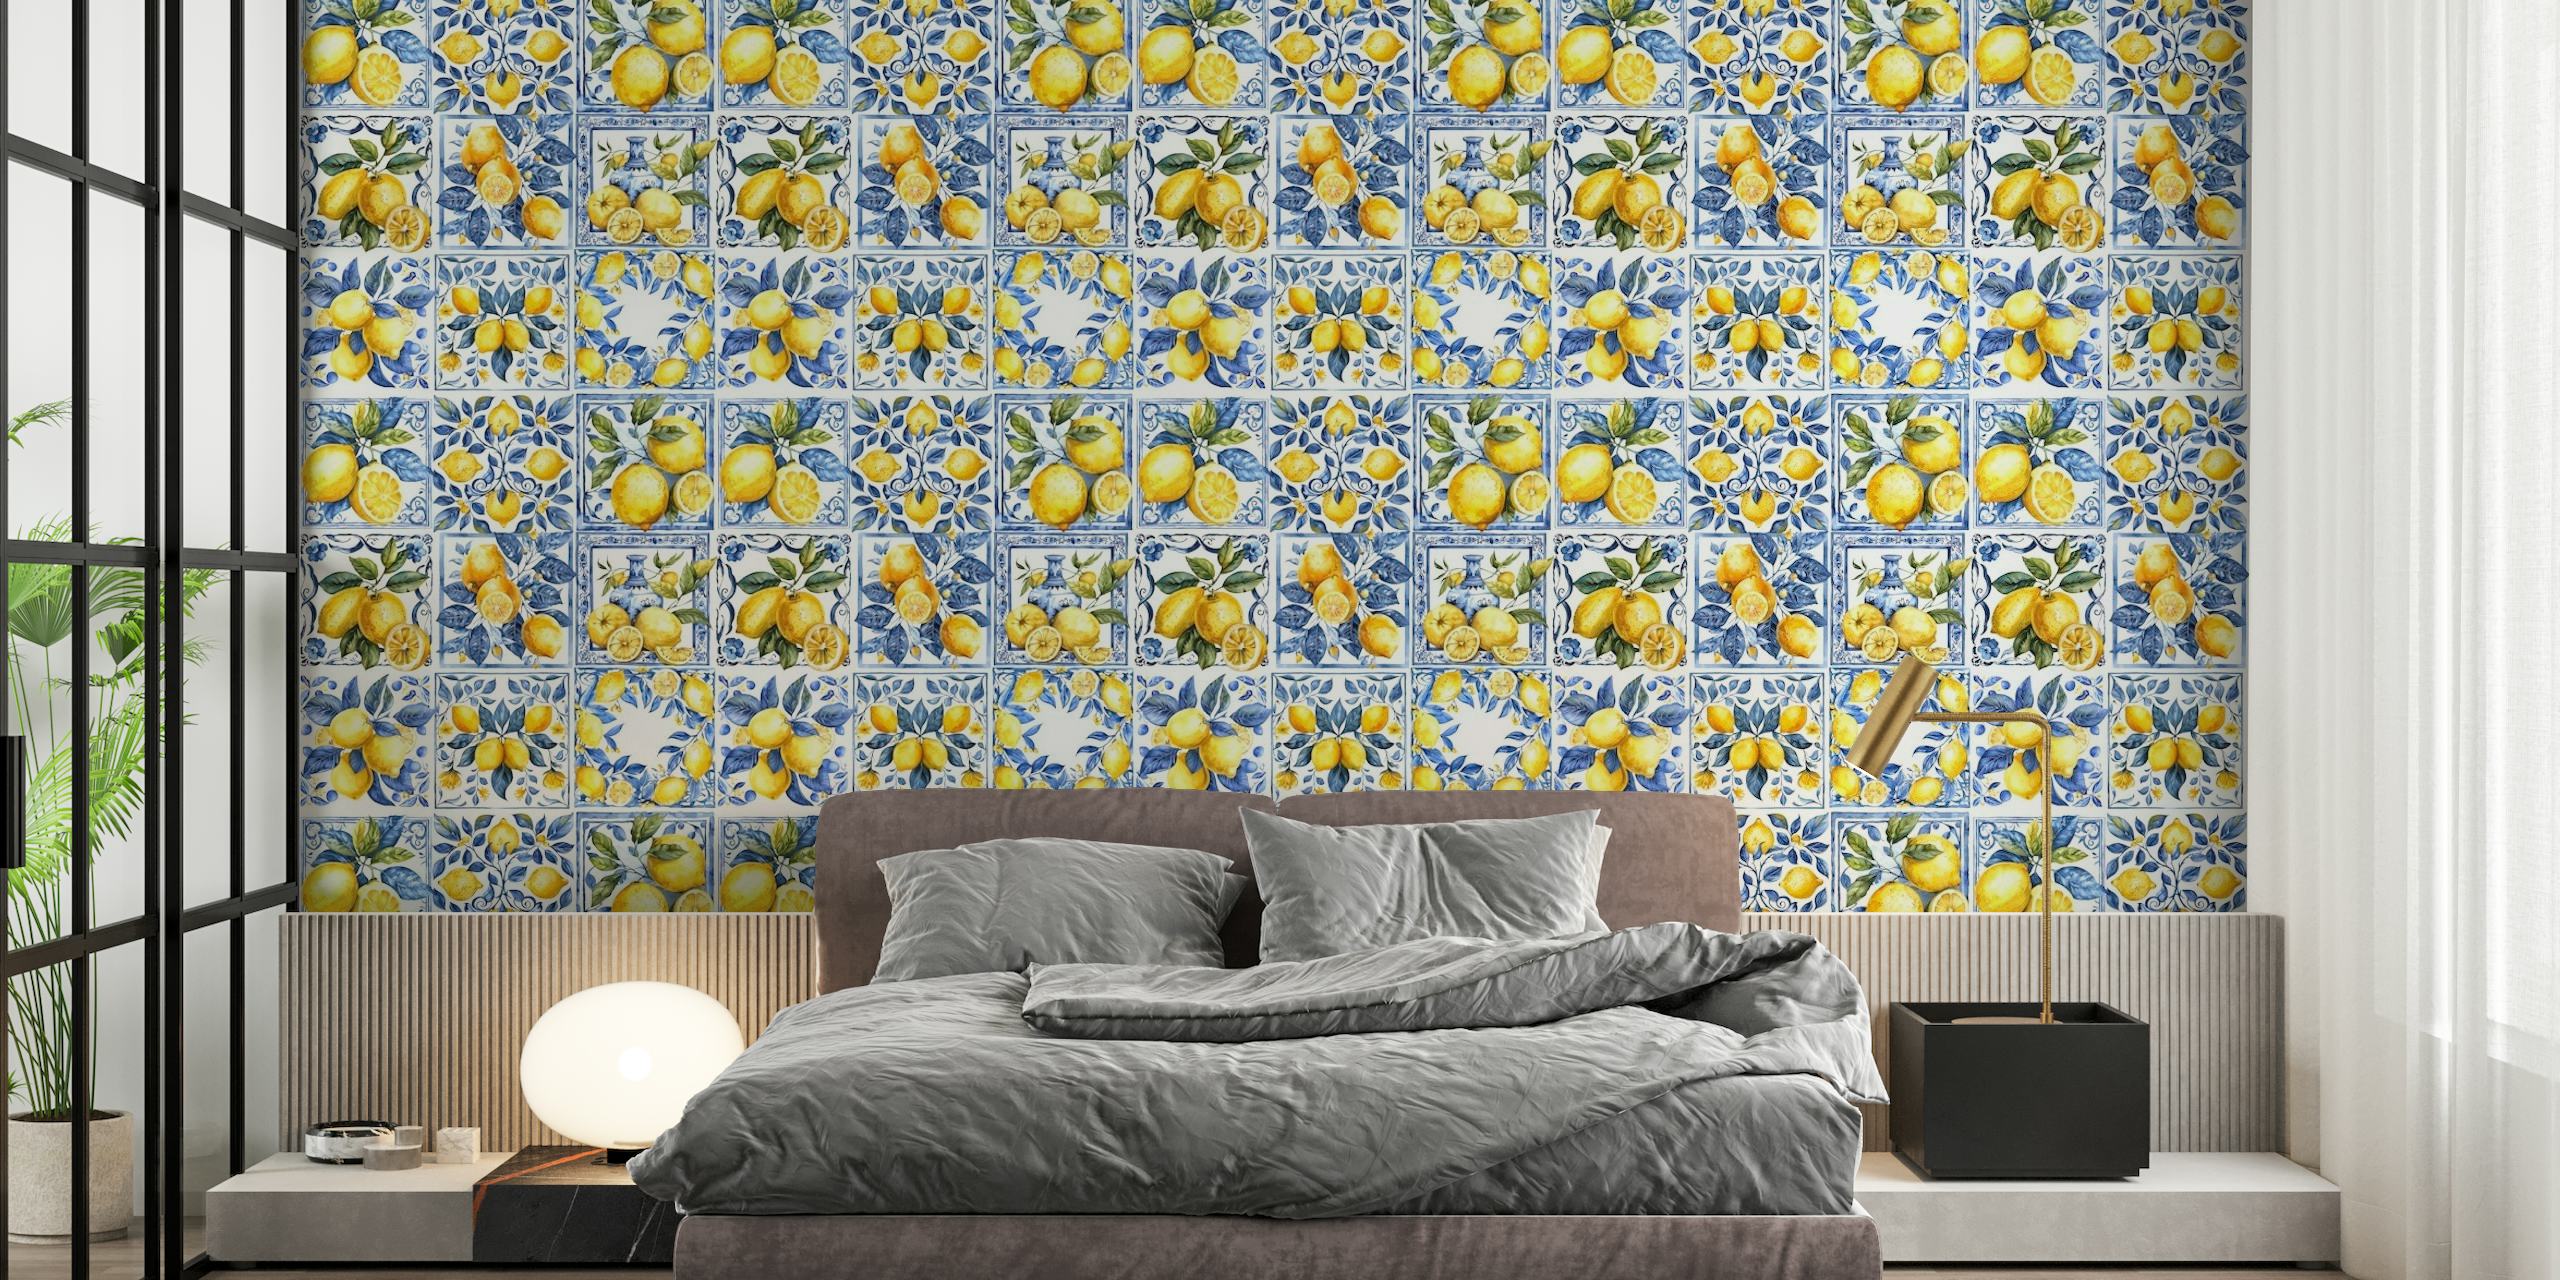 Mediterranean tiles with lemons mural papel pintado